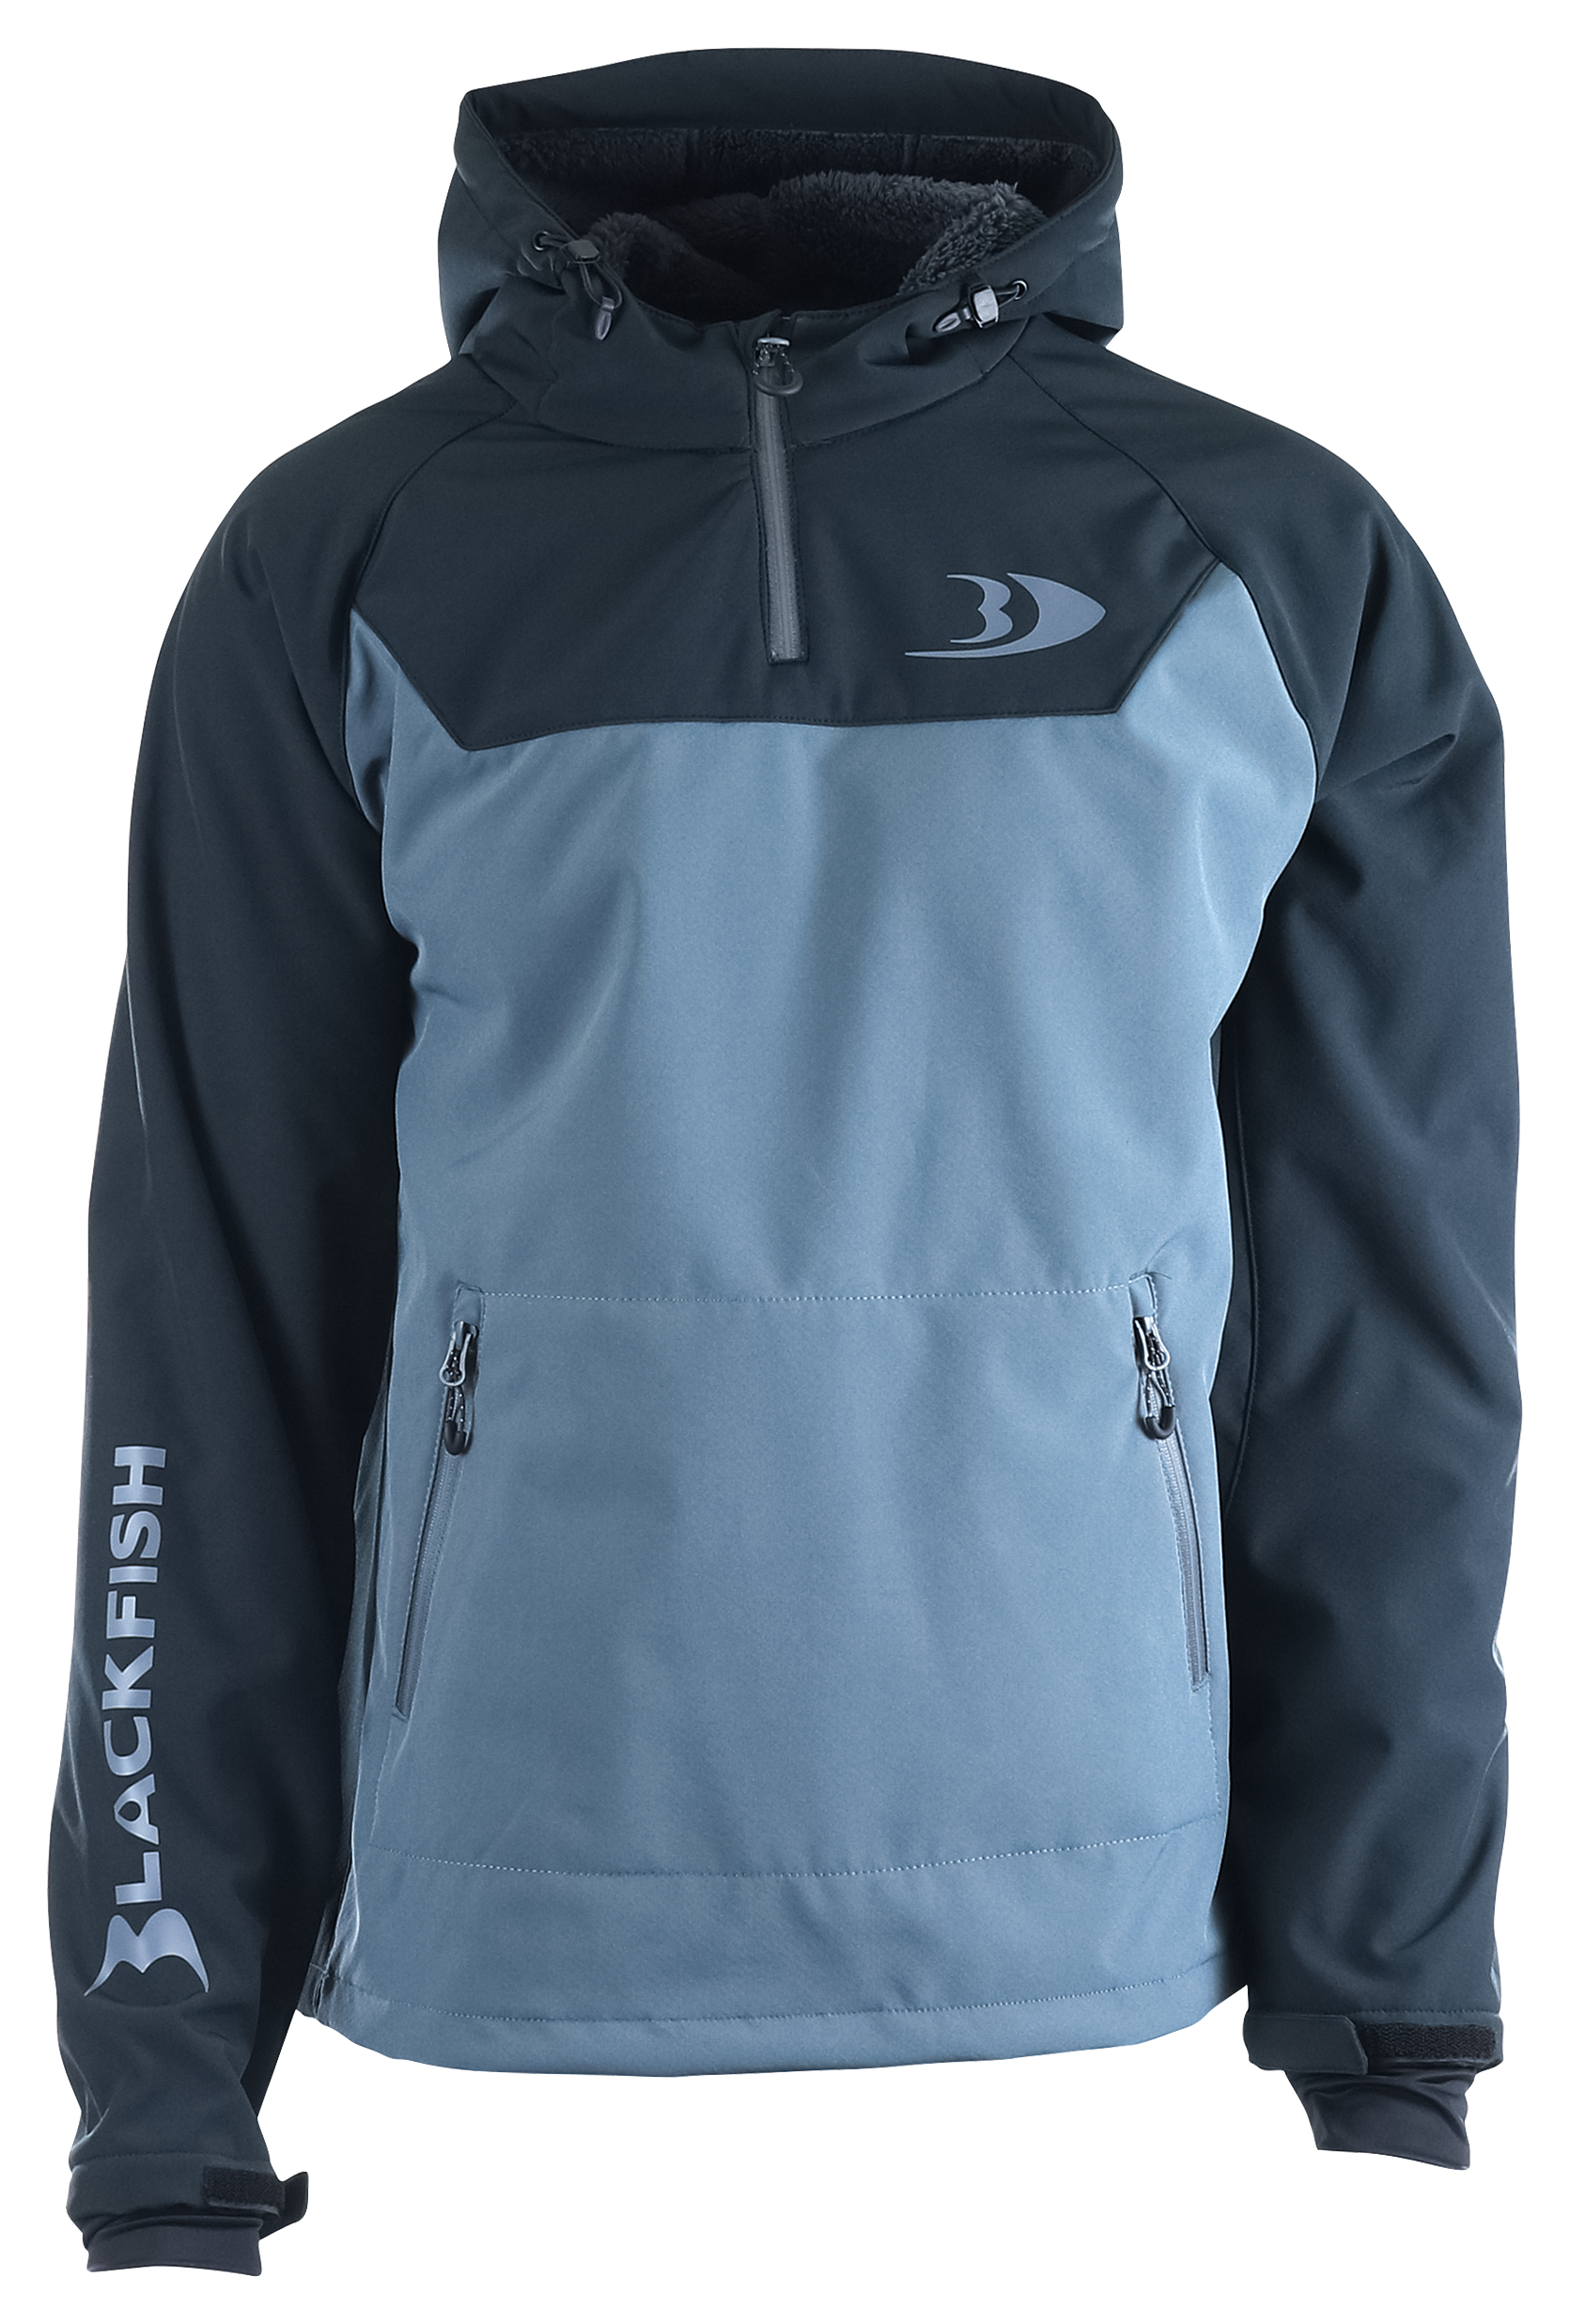 Blackfish Gale 2.0 Soft-Shell Pullover Jacket for Men | Cabela's